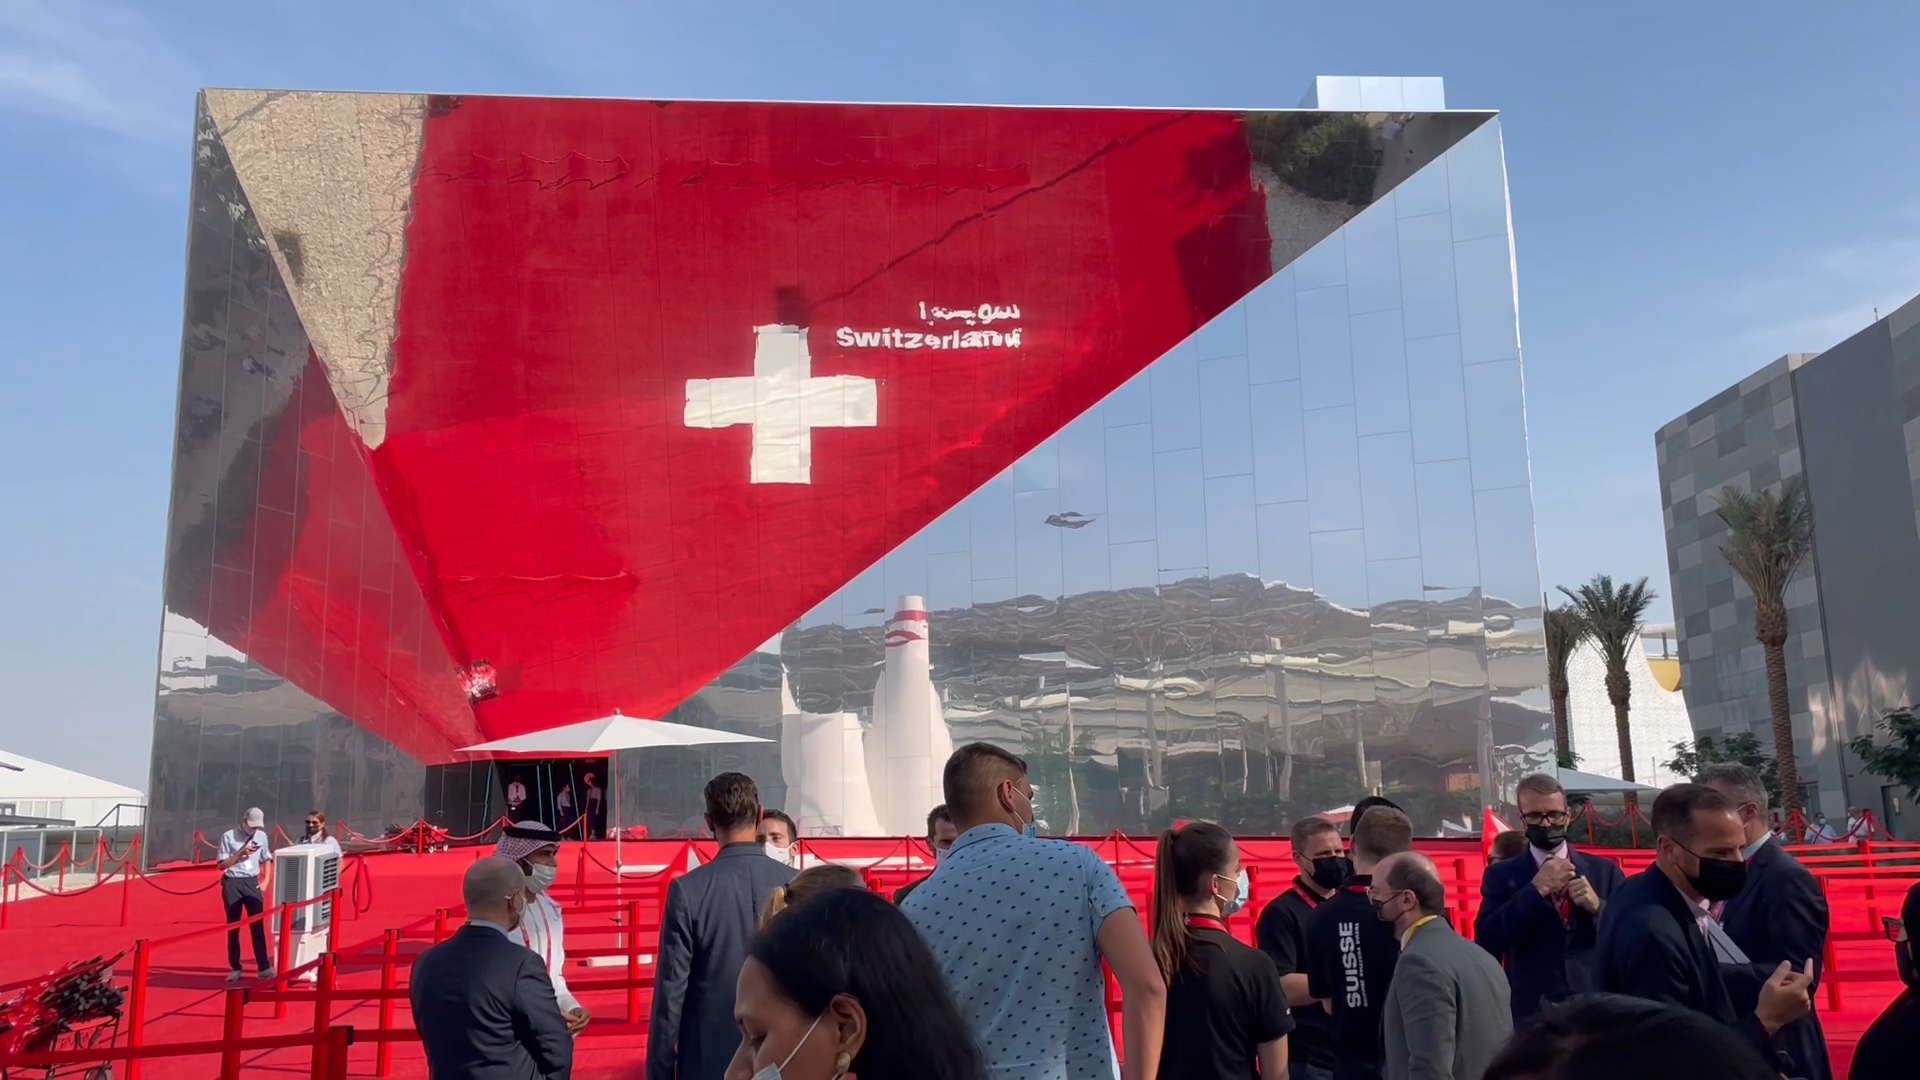 Swiss pavilion at Expo 2020 Dubai